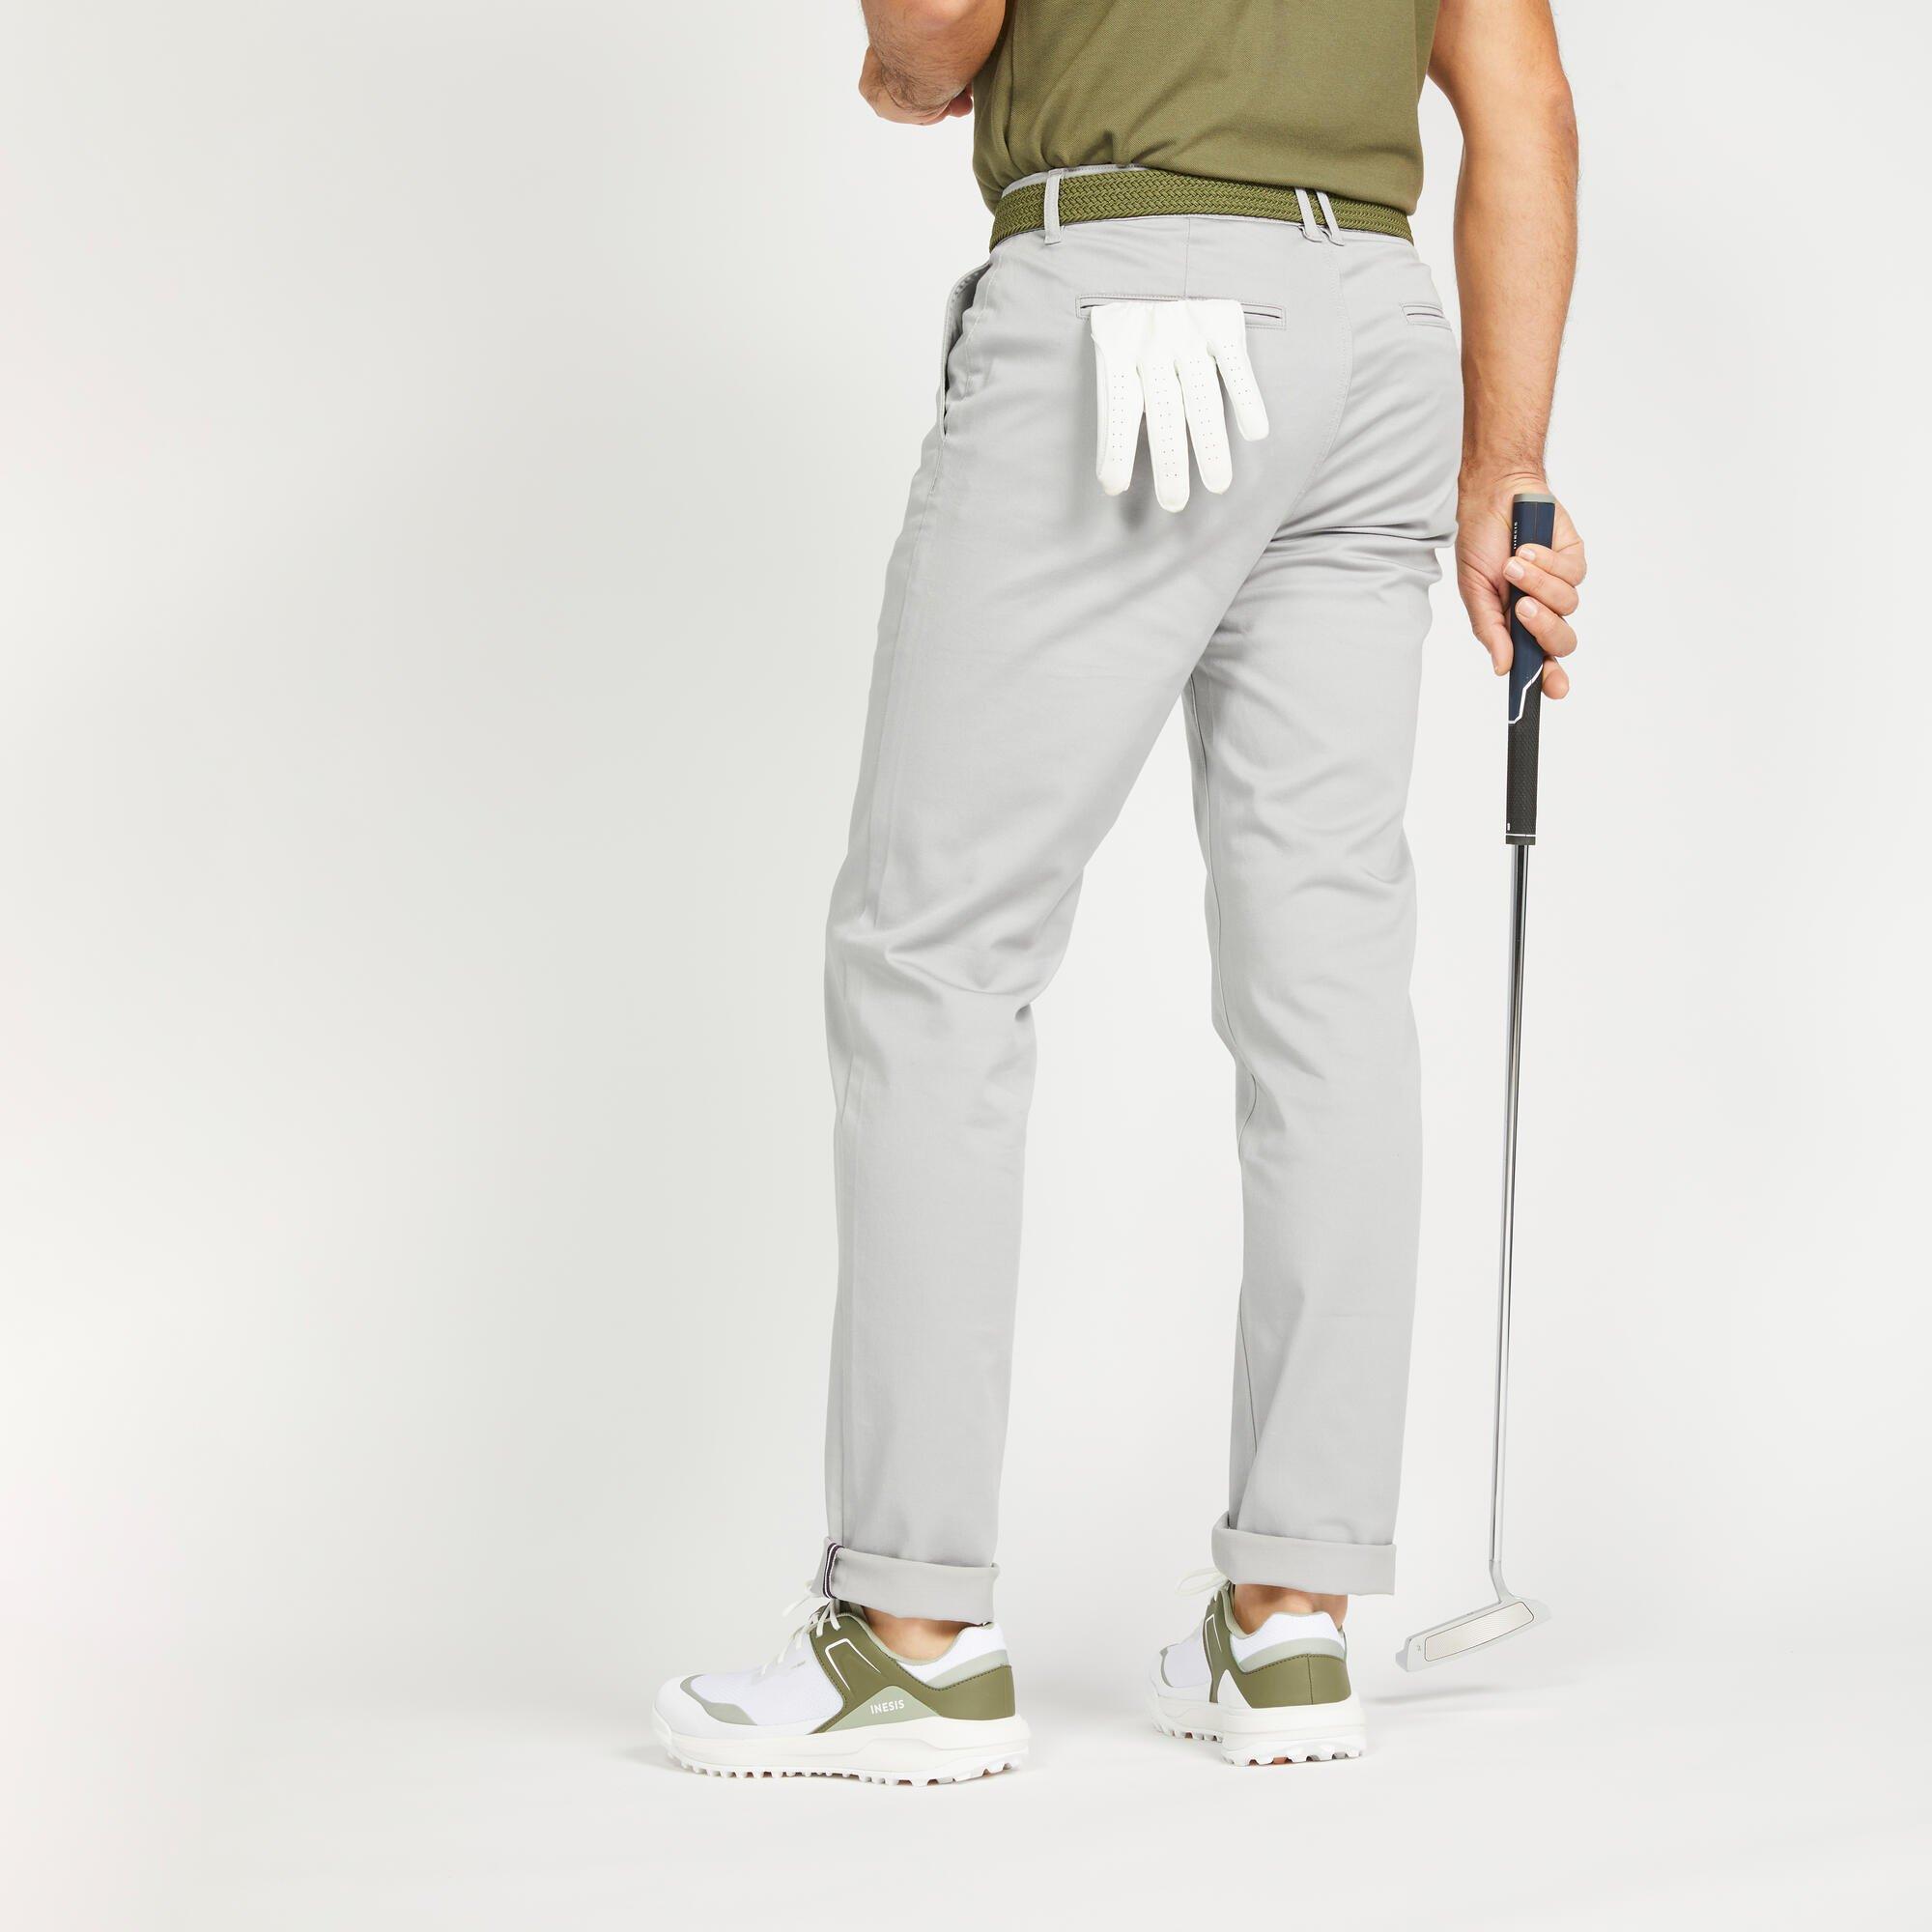 Inesis, Golf Pants, Women's | Golf pants, Golf pants women, Slim fit pants